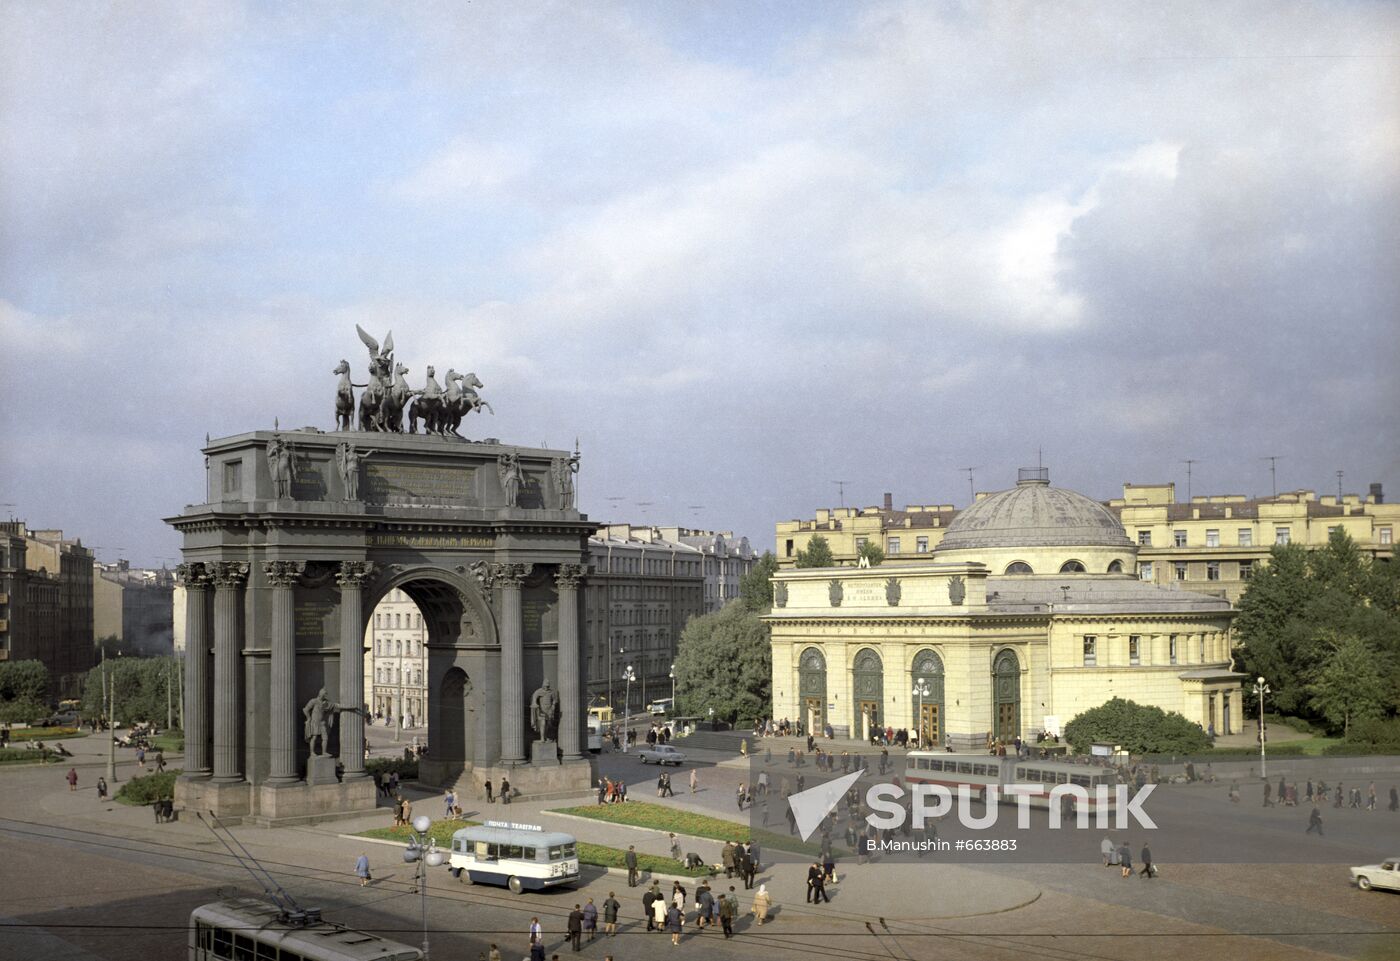 Narva Triumphal Gate in St Petersburg